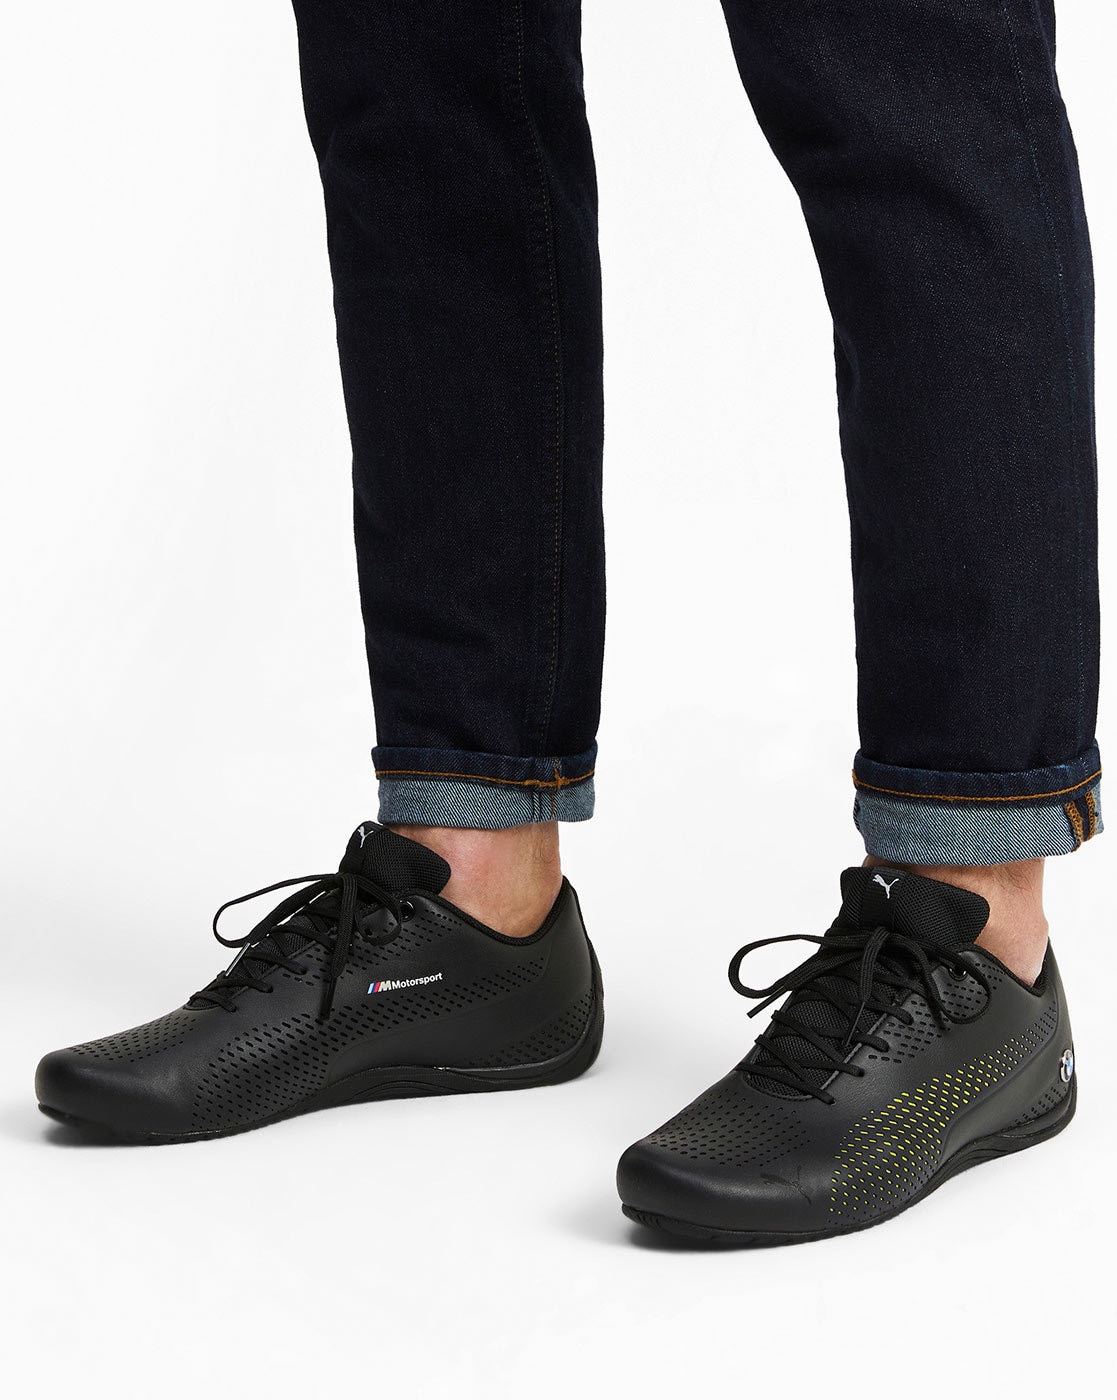 Buy Black Casual Shoes for Men by Puma Online | Ajio.com